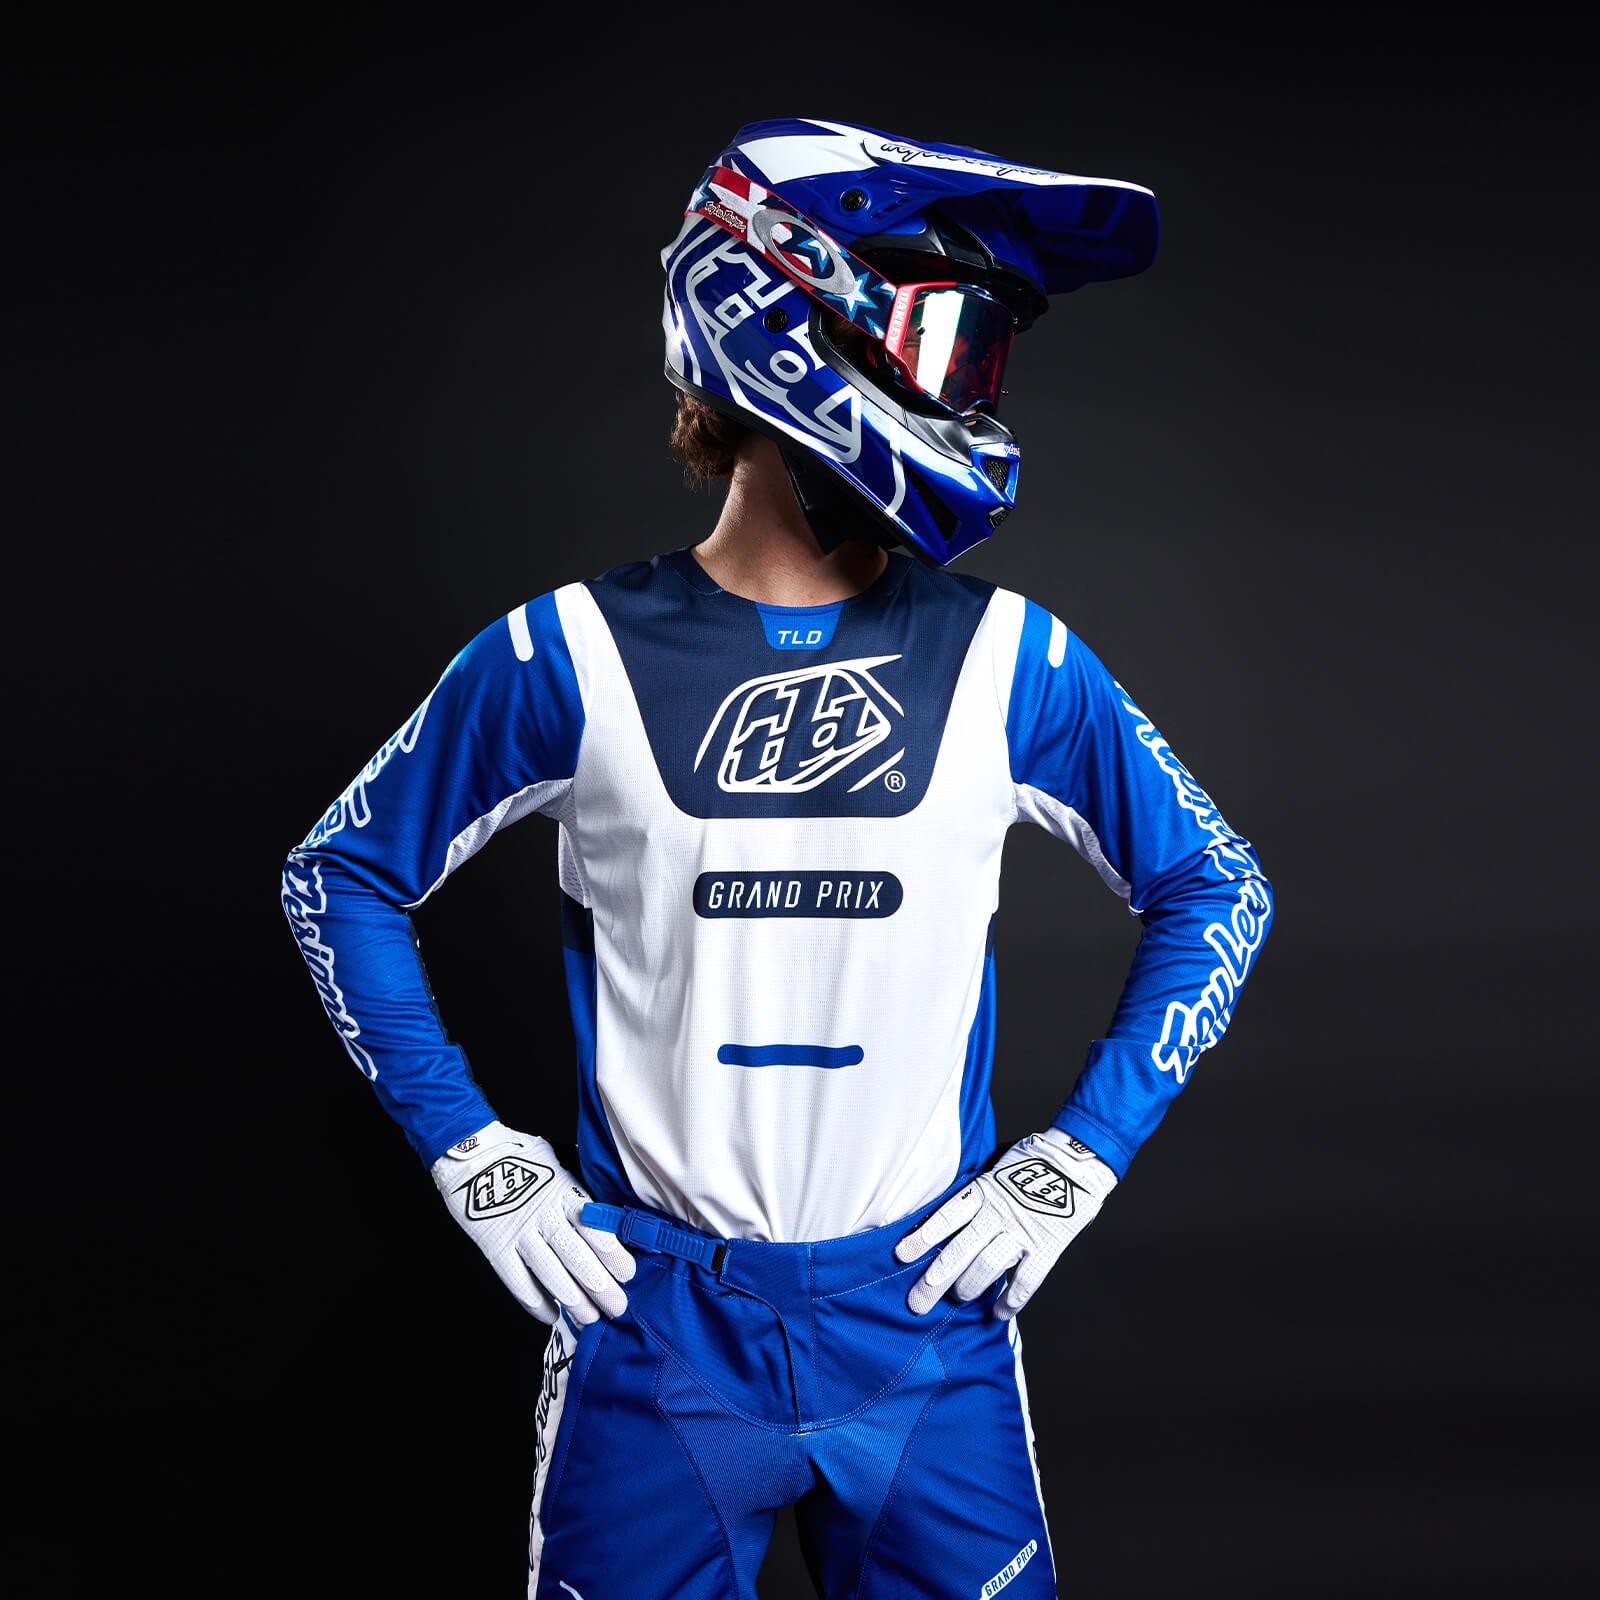 Troy Lee Designs GP Pro Moto gear rider against a backdrop